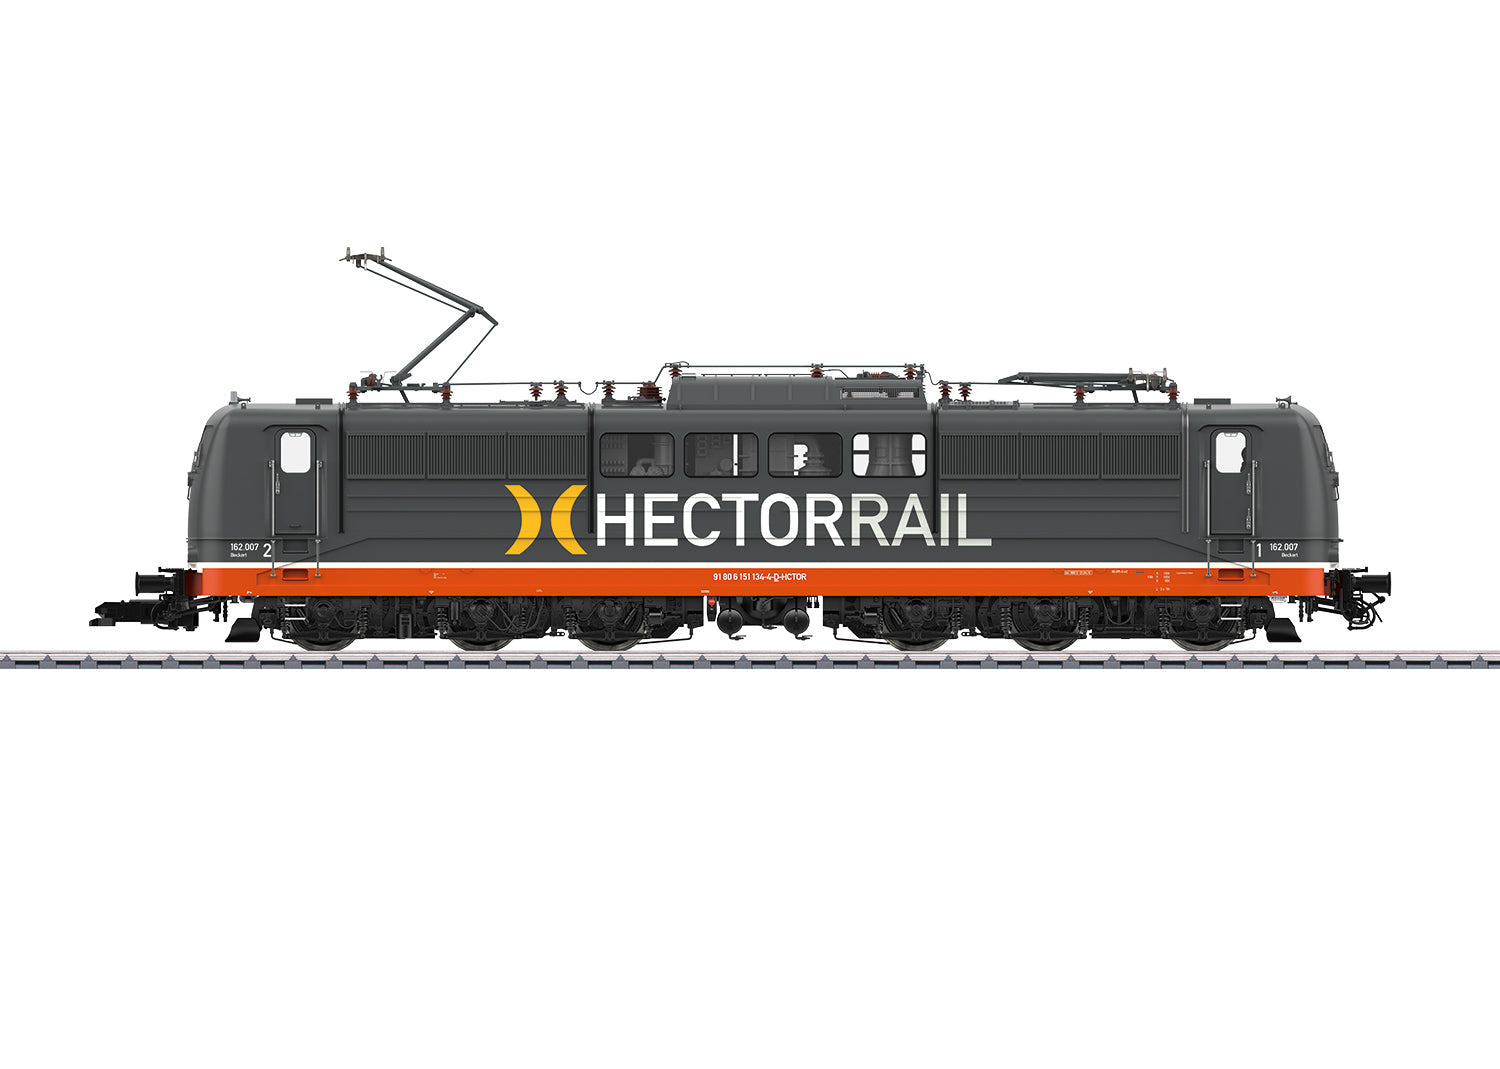 Marklin 1 55253 Hectorrail cl162 elect.loco 2023 New Item 